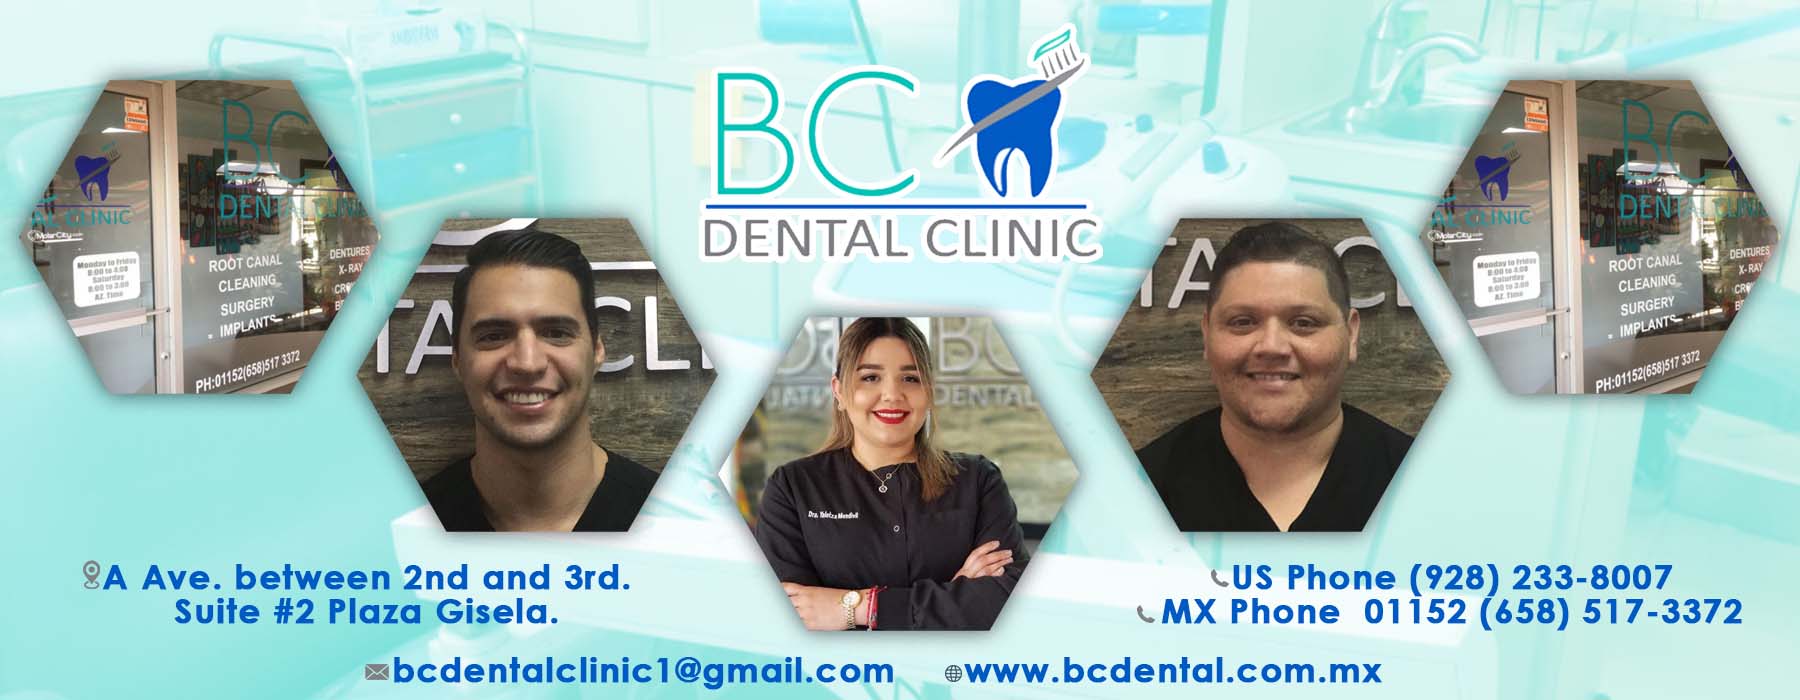 BC Dental Clinic